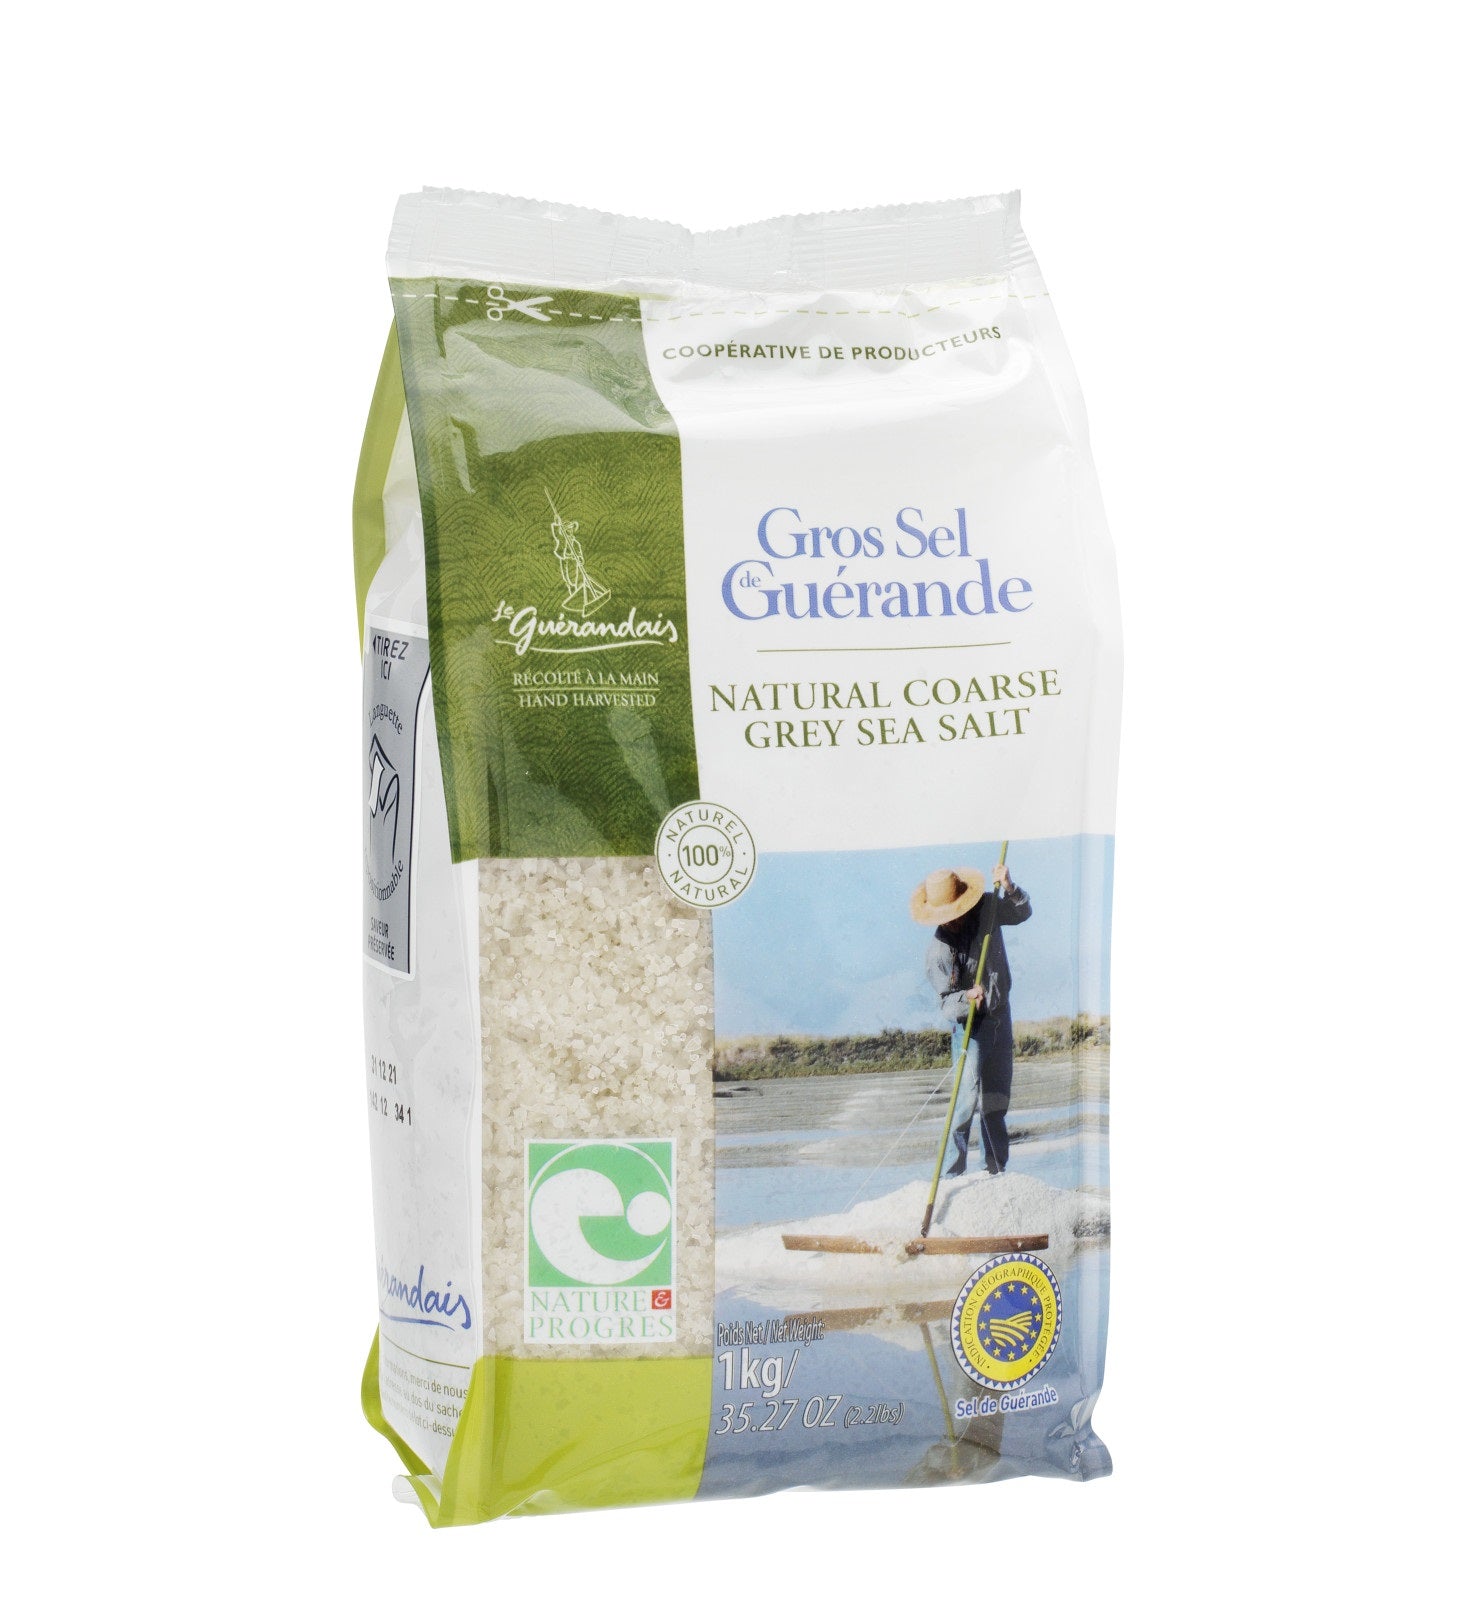 Unrefined Le Guerande Celtic Sea Salt - Grey Coarse 1kg - certified by Nature & Progress